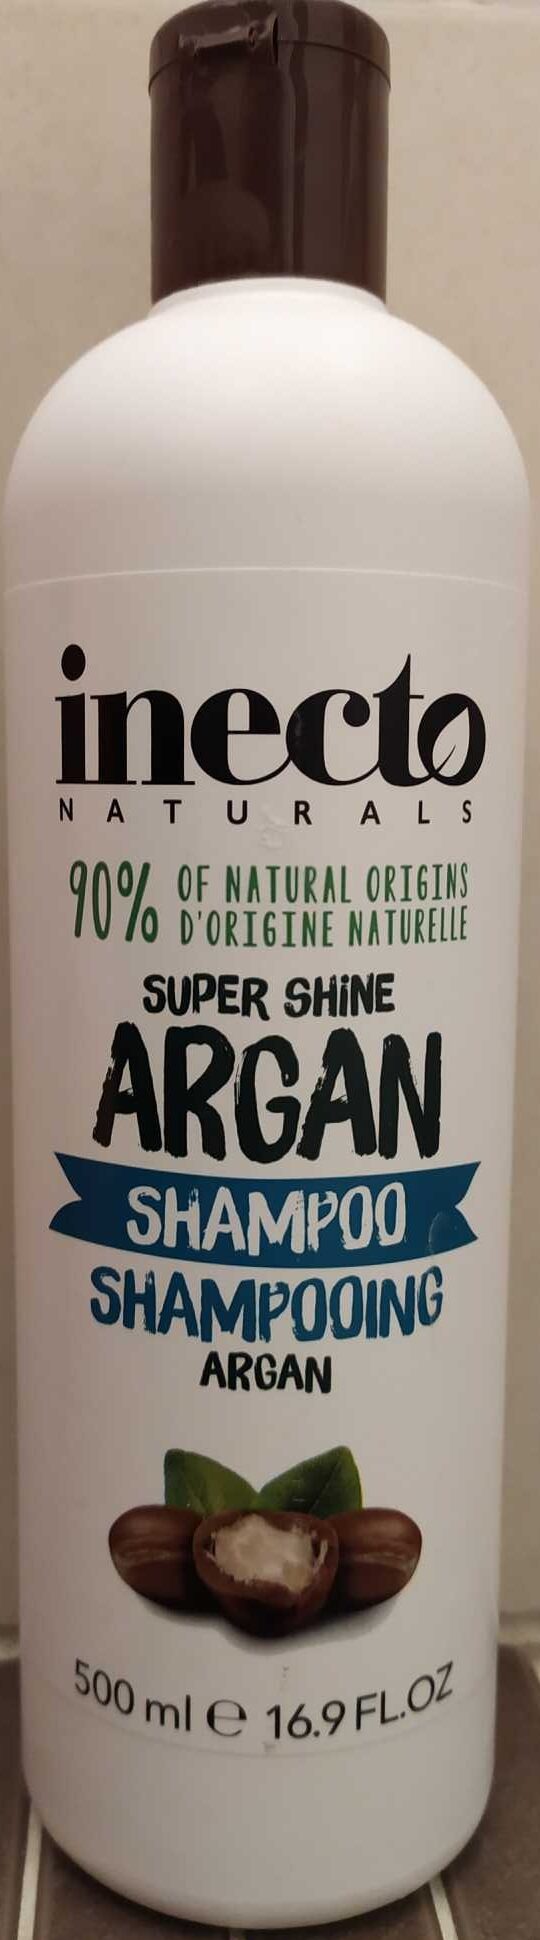 Shampoing ARGAN - Produto - fr